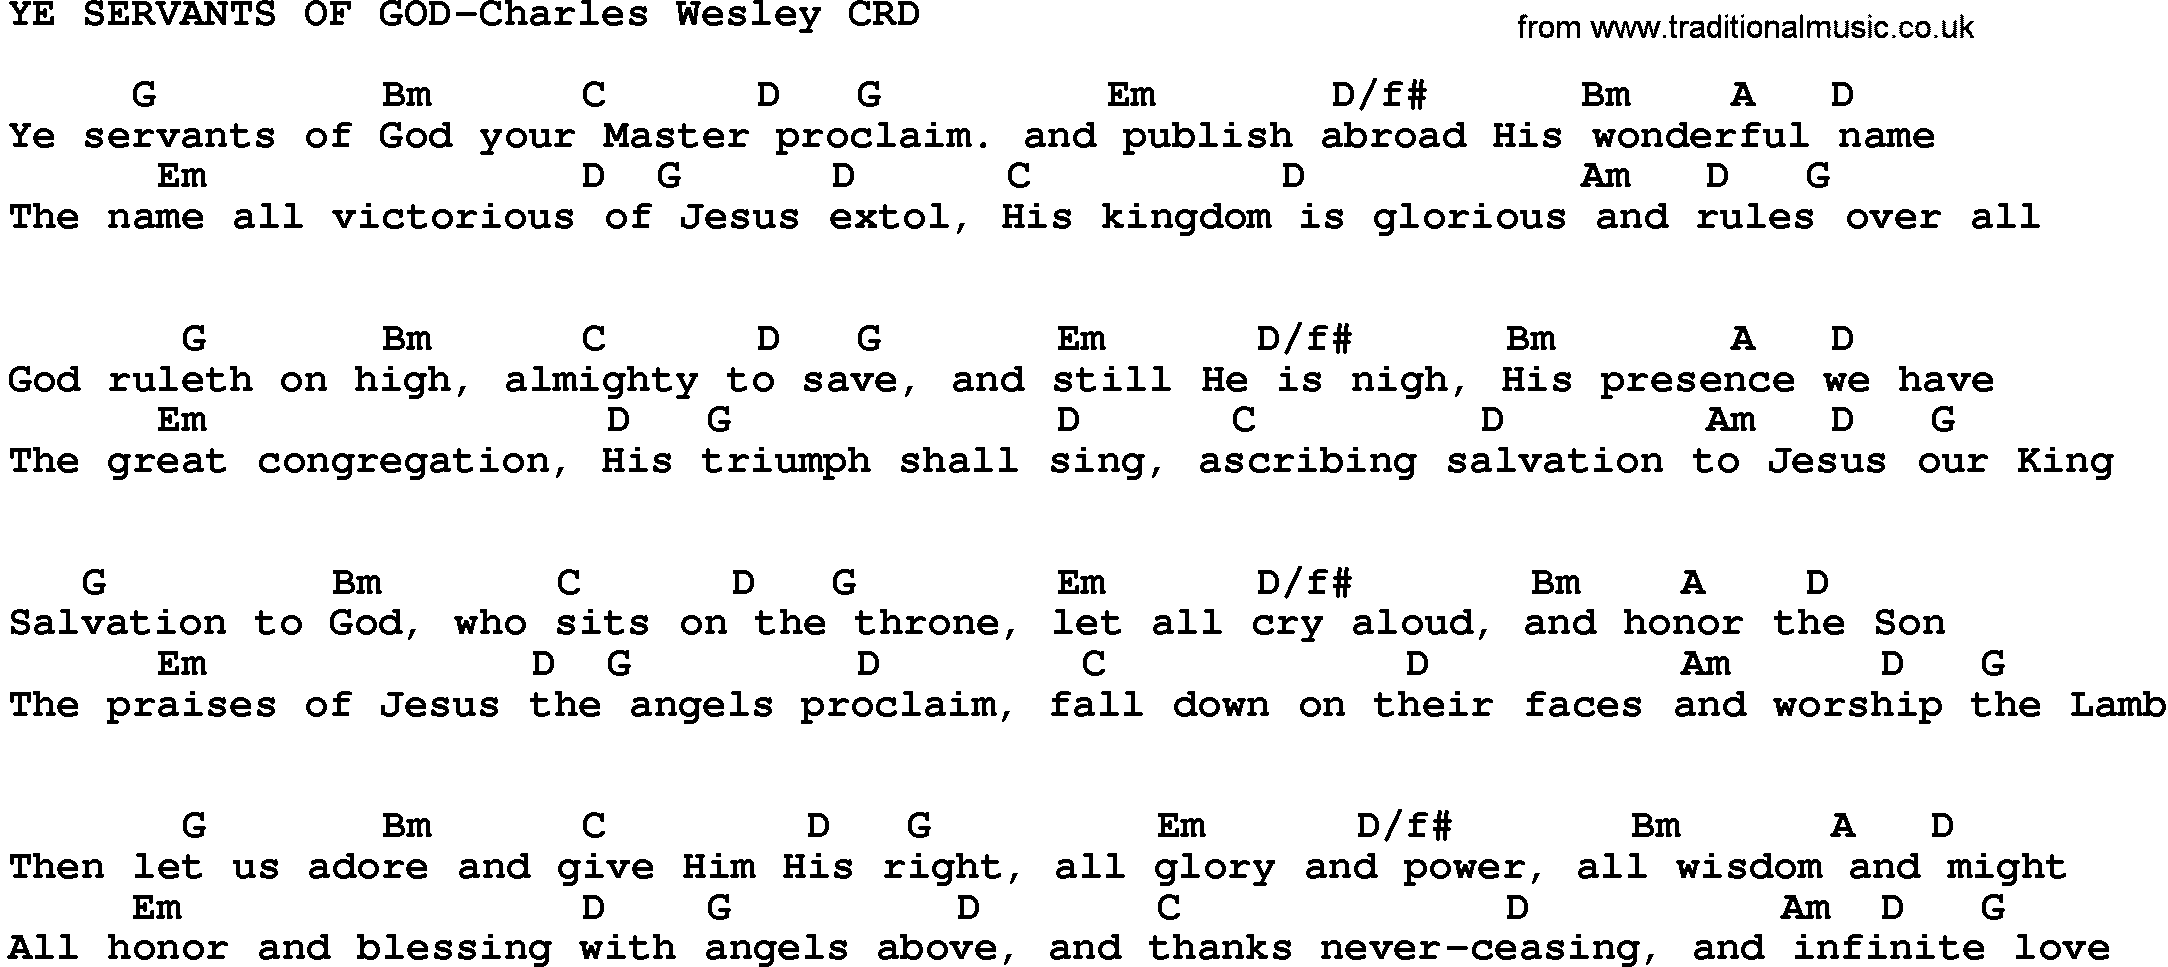 Gospel Song: Ye Servants Of God-Charles Wesley, lyrics and chords.